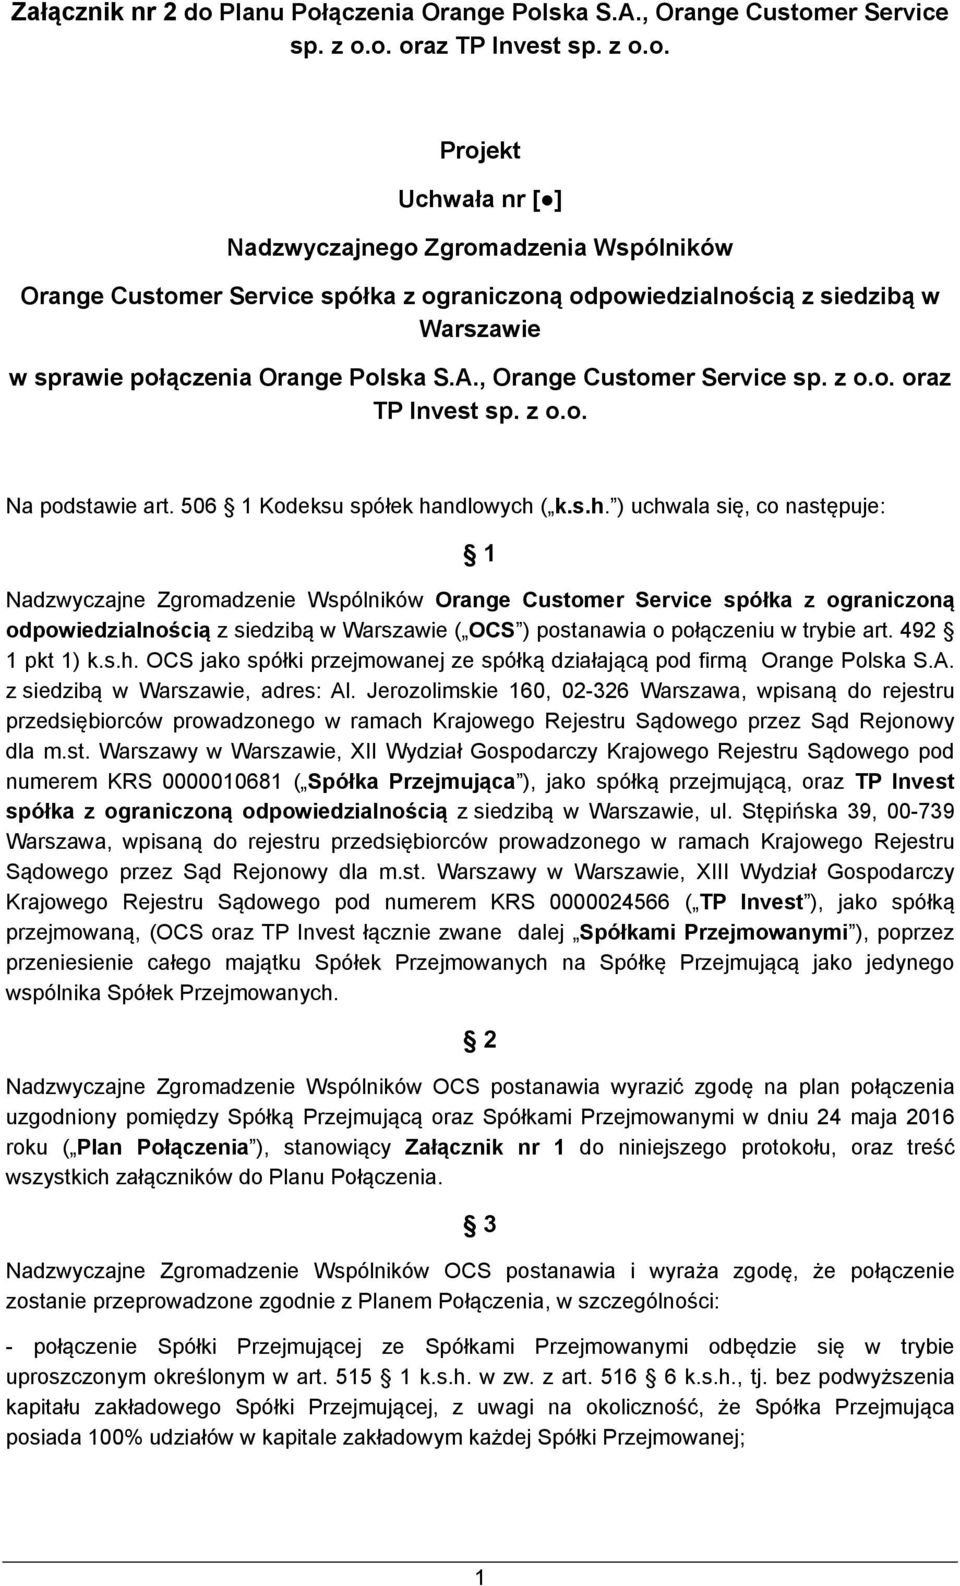 A., Orange Customer Service sp. z o.o. oraz TP Invest sp. z o.o. Na podstawie art. 506 1 Kodeksu spółek ha